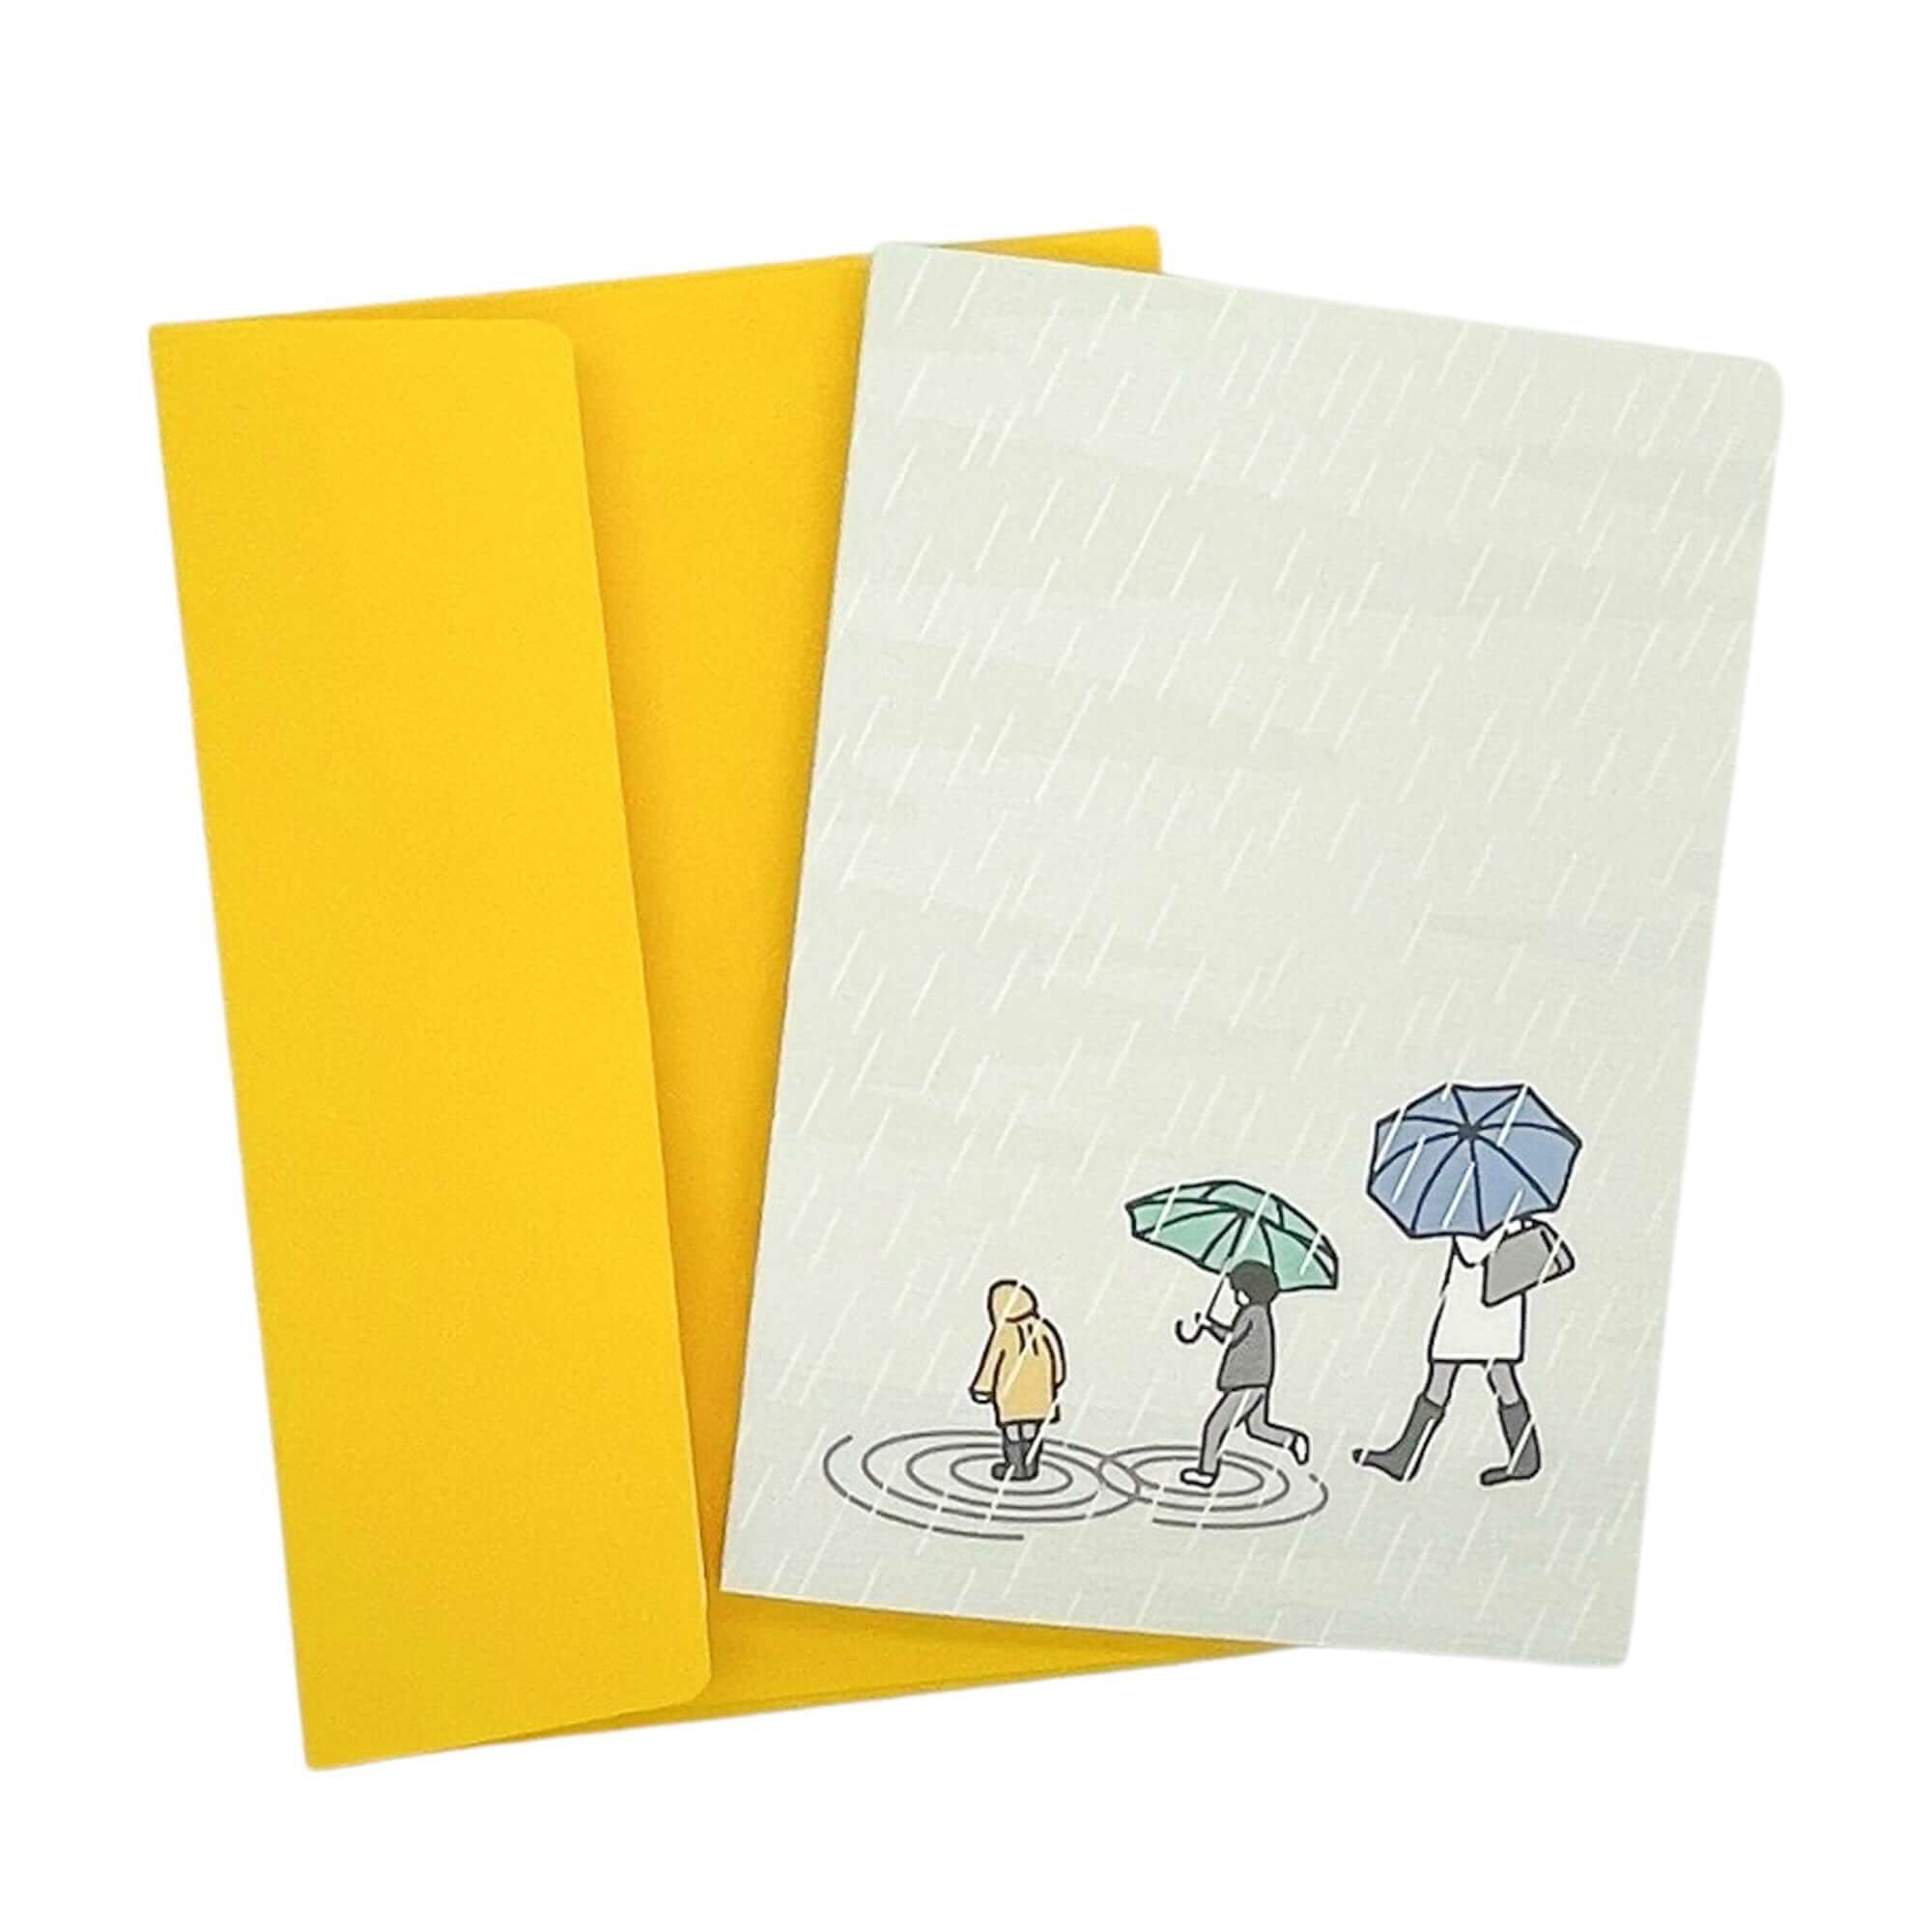 Rainy Day Greetings Card Greetings Card Mustard and Gray Ltd Shropshire UK